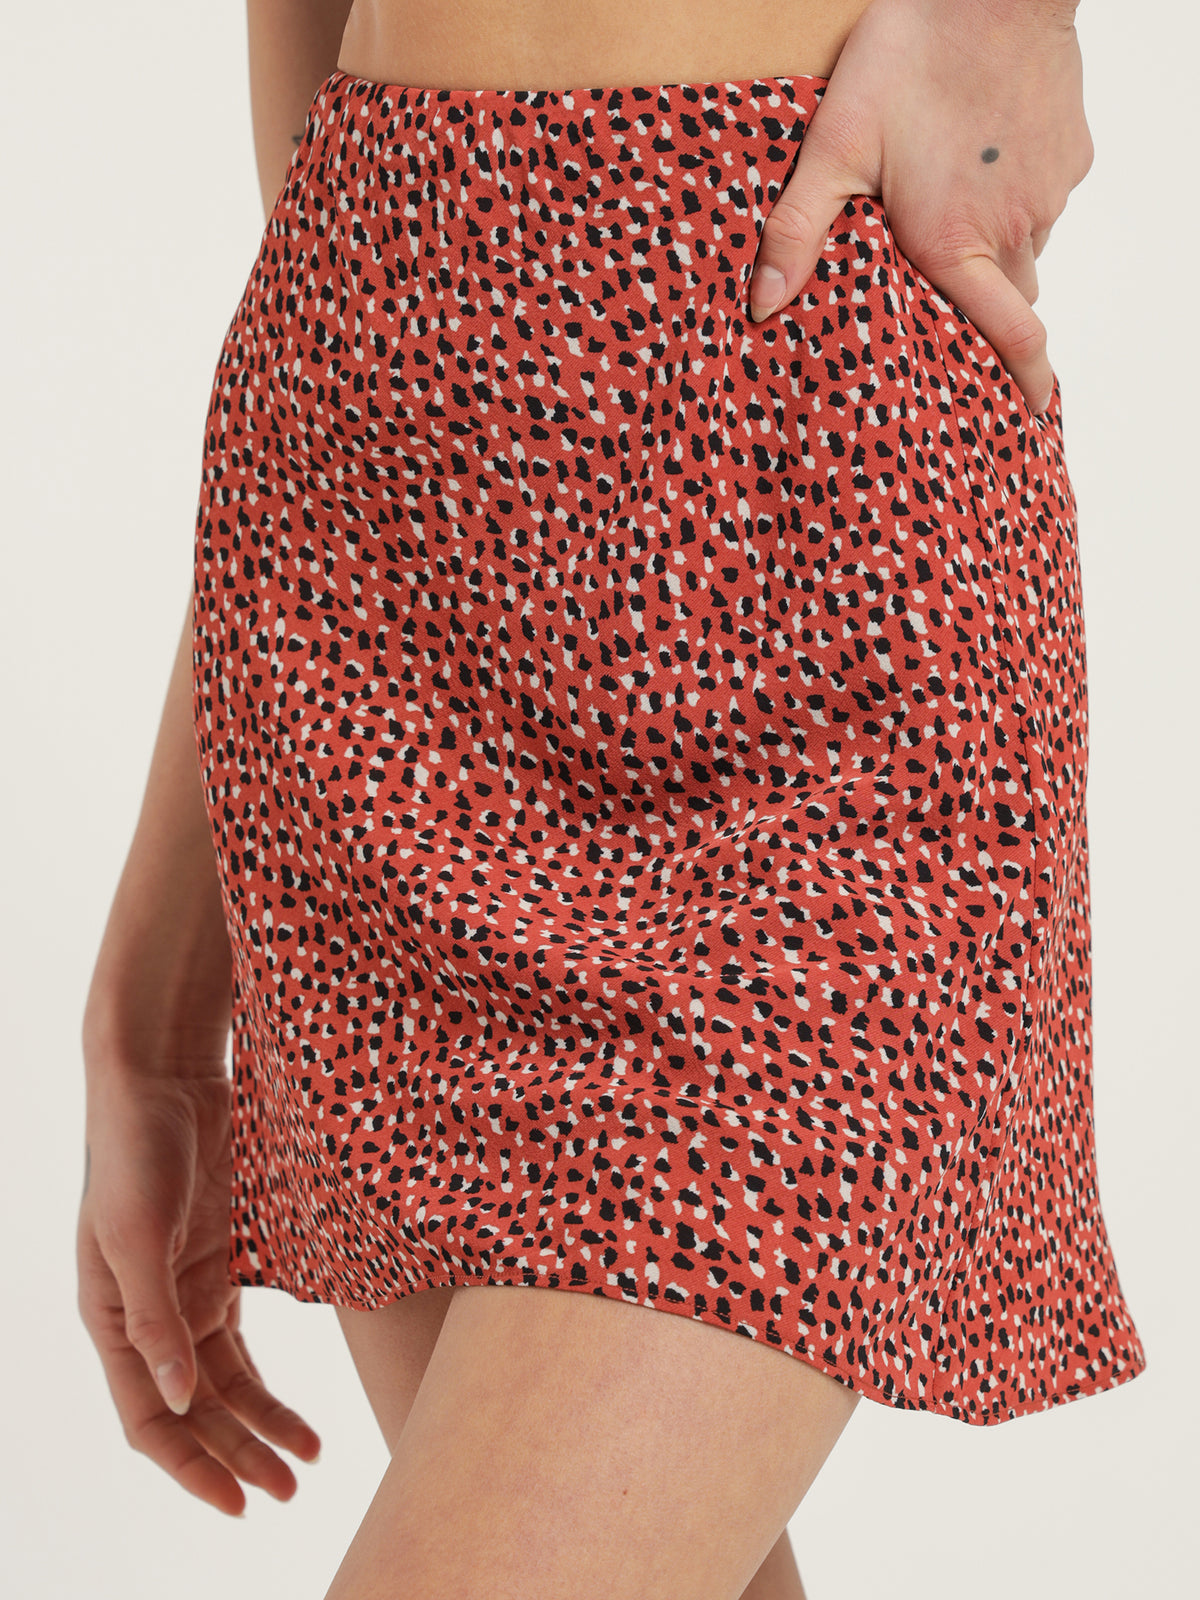 Ariel Mini Skirt in Cheetah